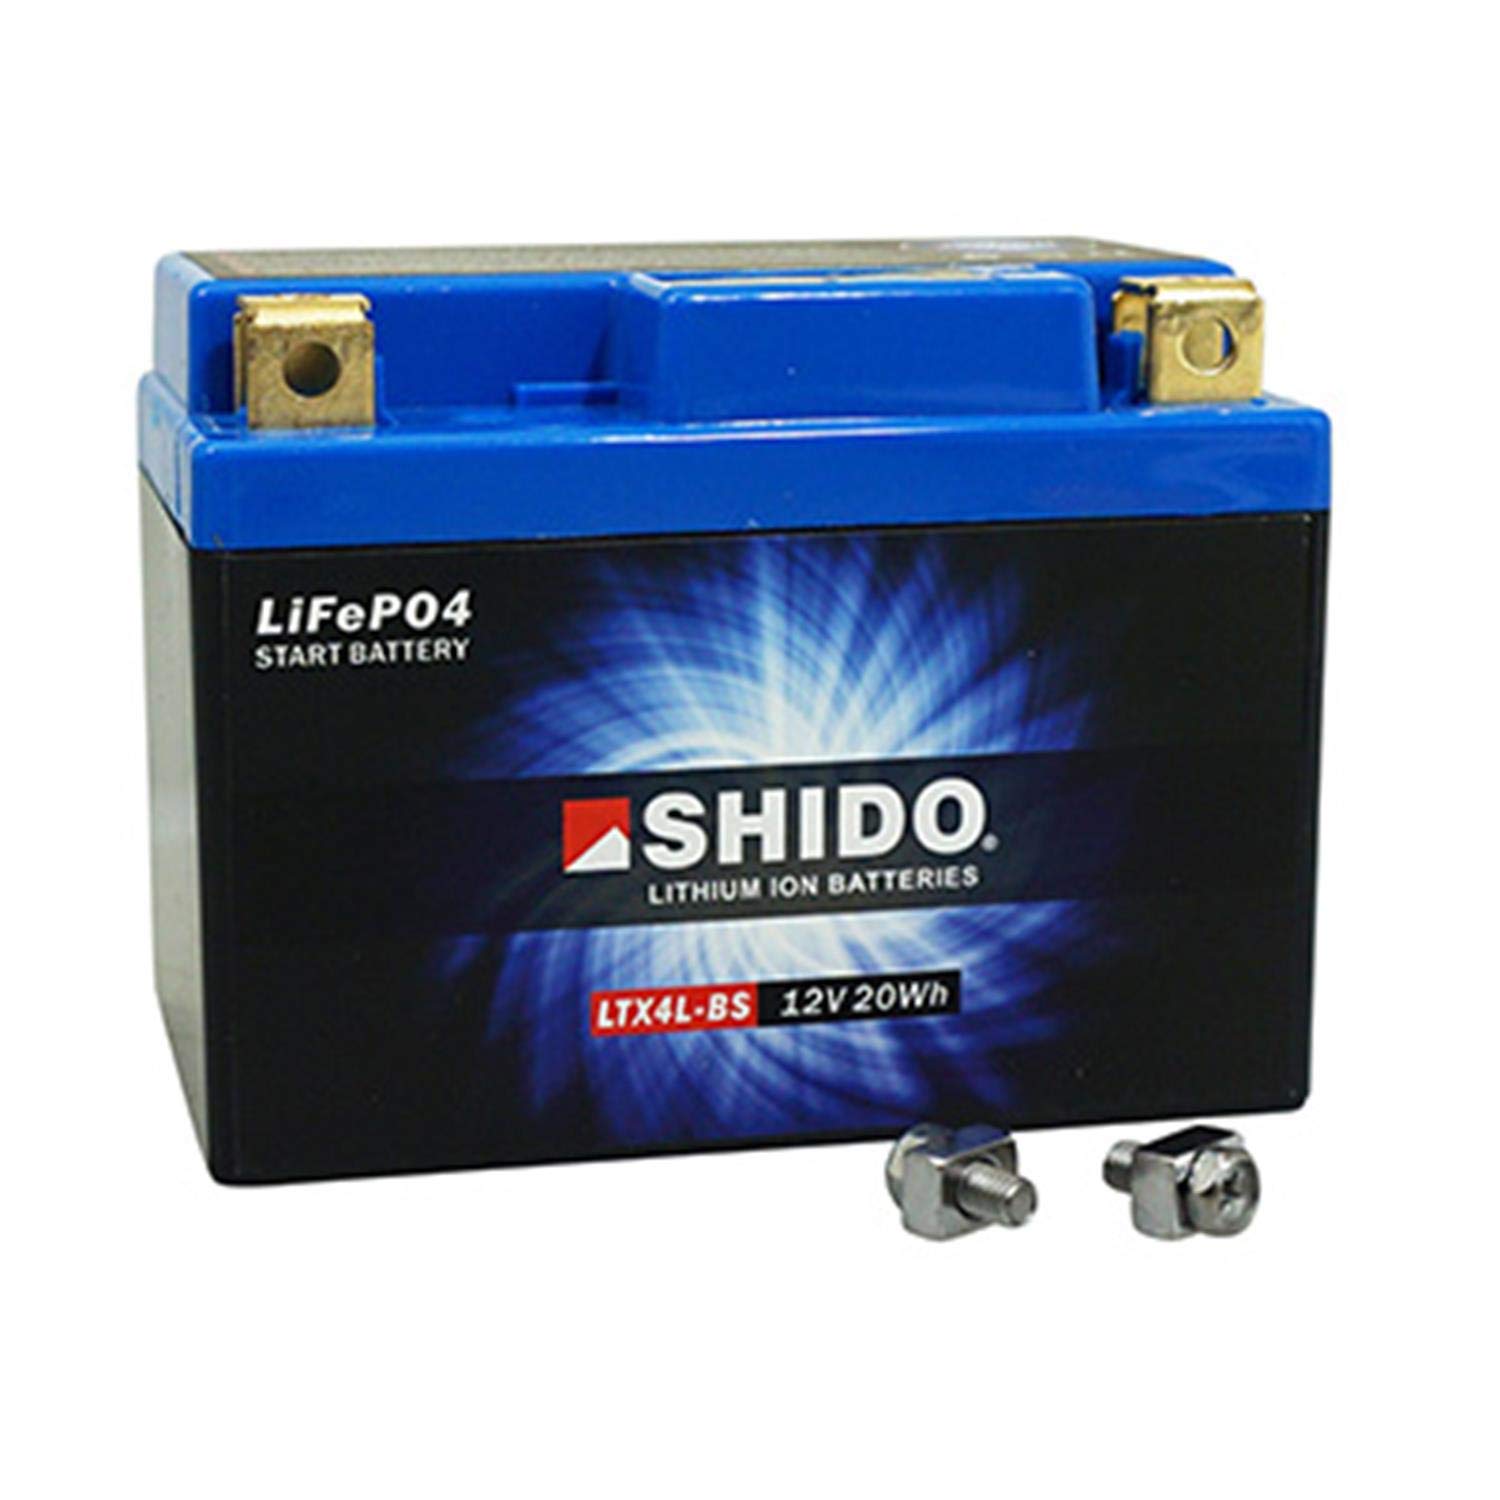 SHIDO LTX4L-BS LION -S- Batterie Lithium, Ion Blau (Preis inkl. EUR 7,50 Pfand) von SHIDO